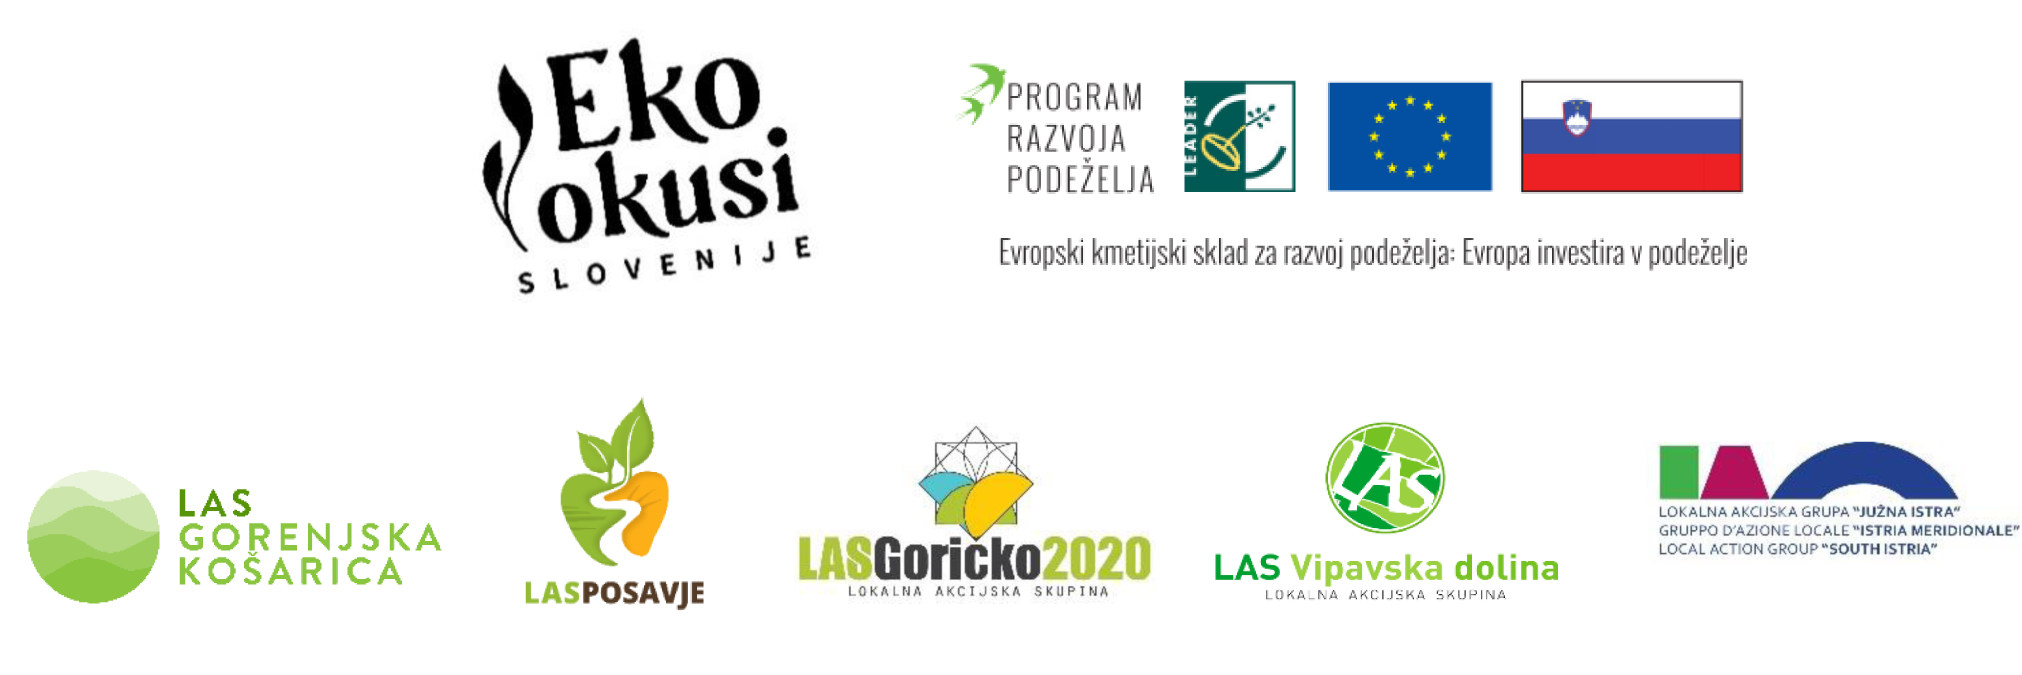 Projekt LAS "EKO Okusi Slovenije"